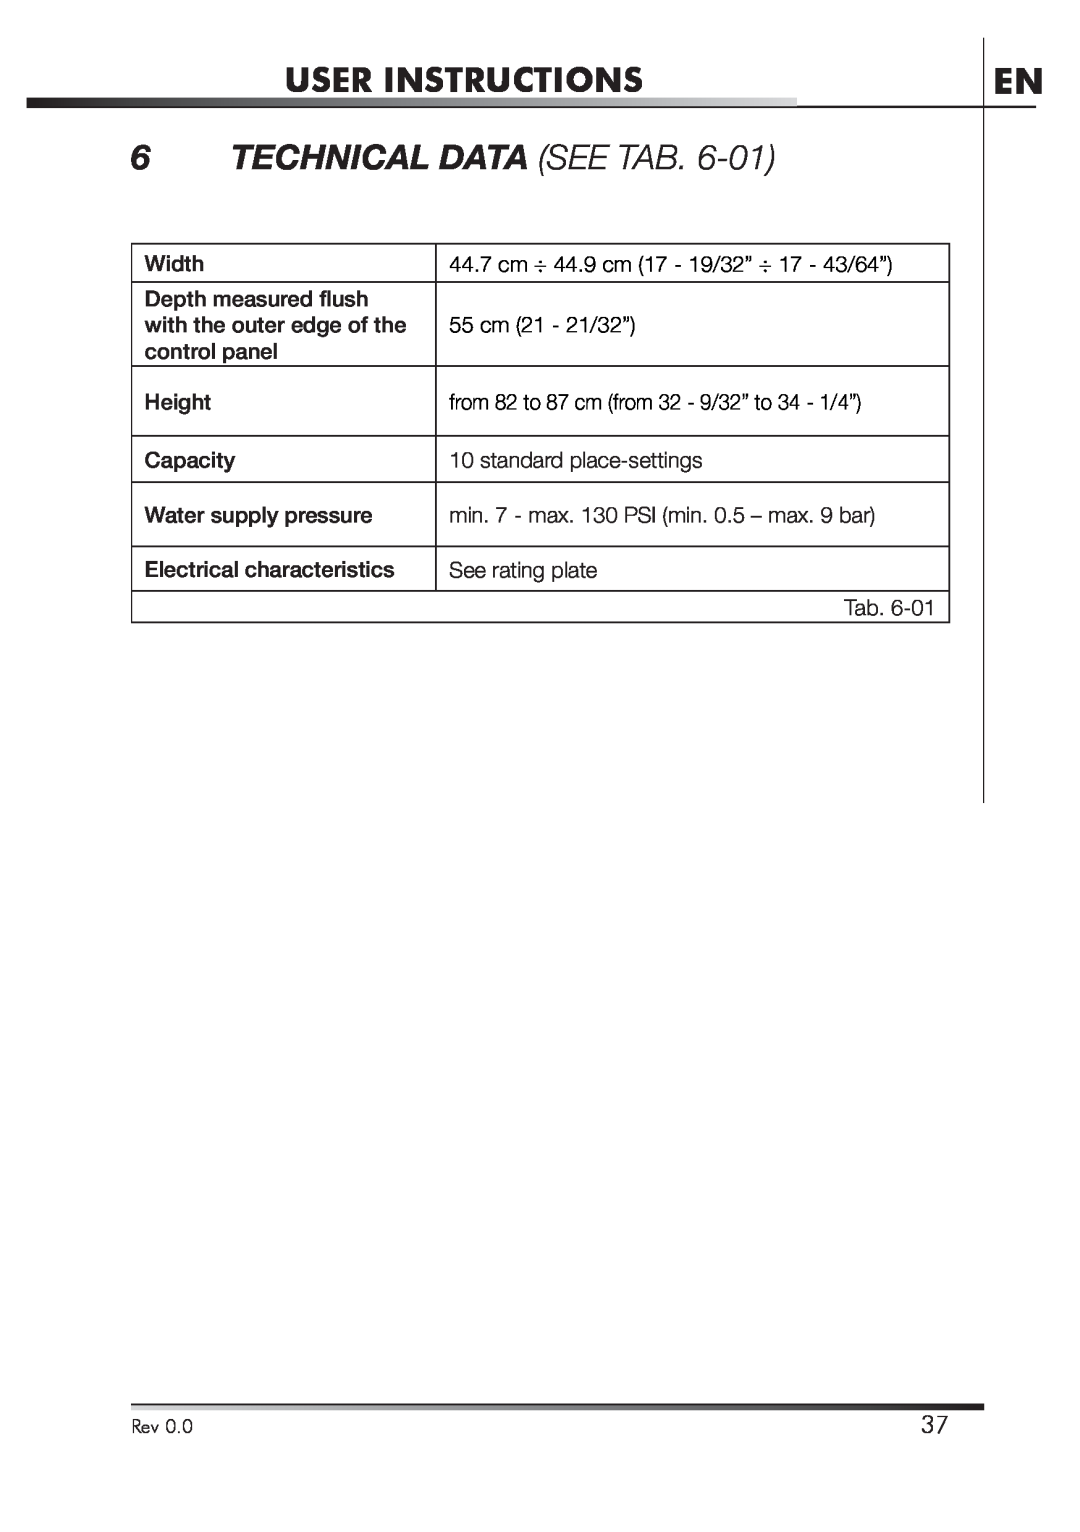 Smeg STA4645U manual Technical Data See Tab, User Instructions 